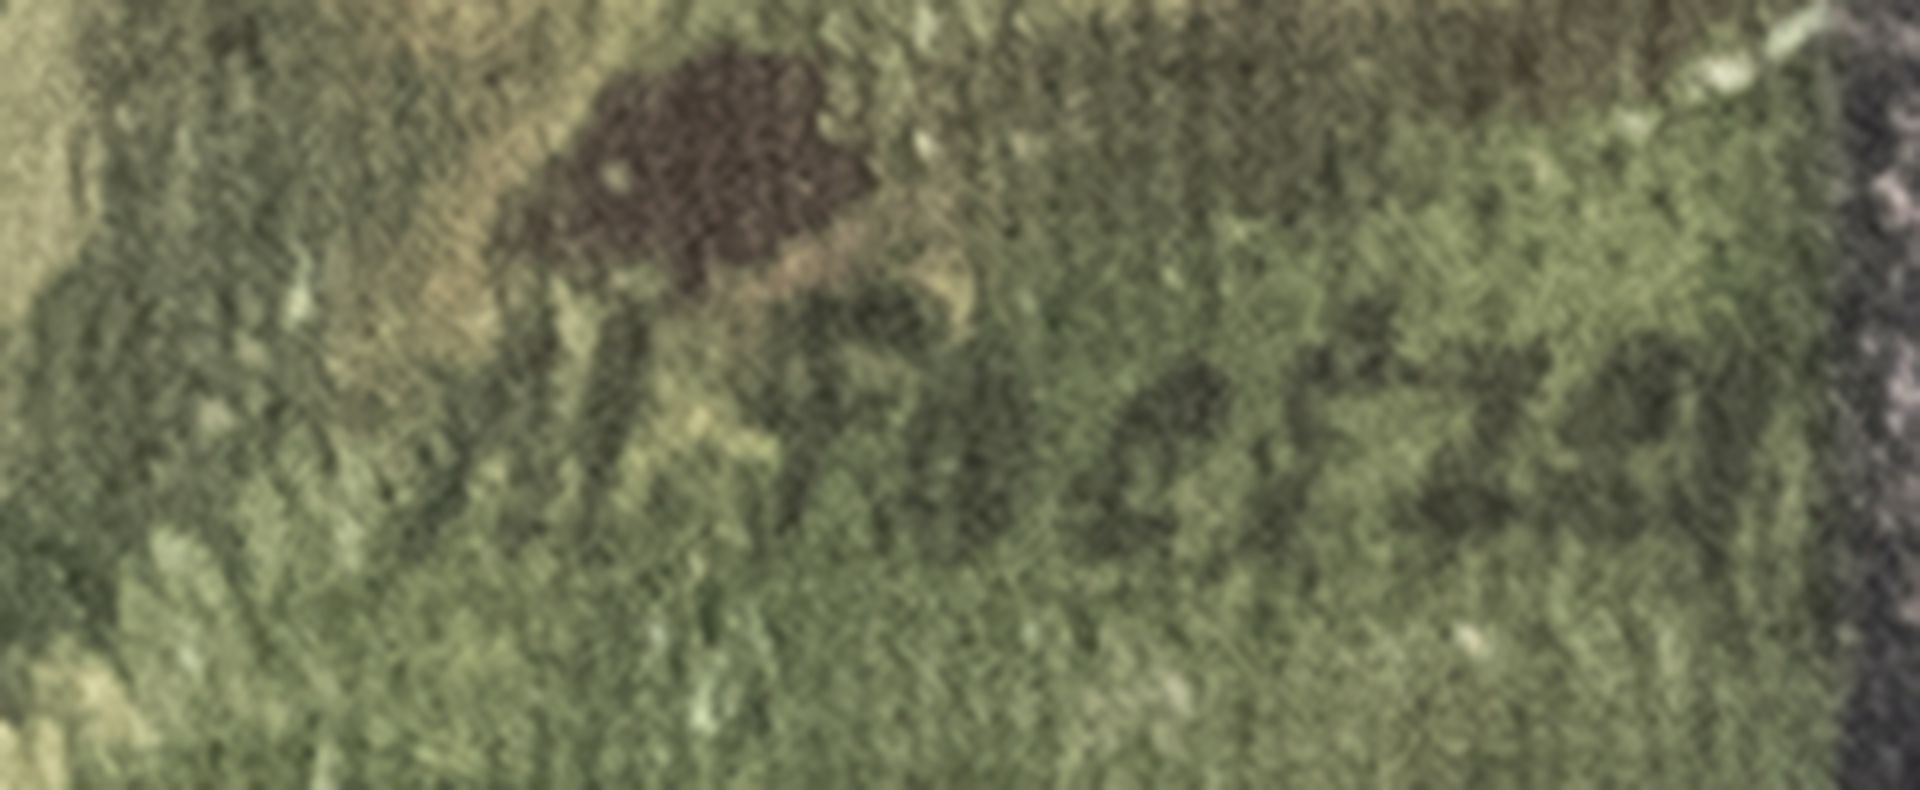 Ölgemälde "Bauernhof", Holzrahmen reparaturbedürftig. Rechts unten signiert. Maße: ca. 47 cm x ca. - Image 2 of 2